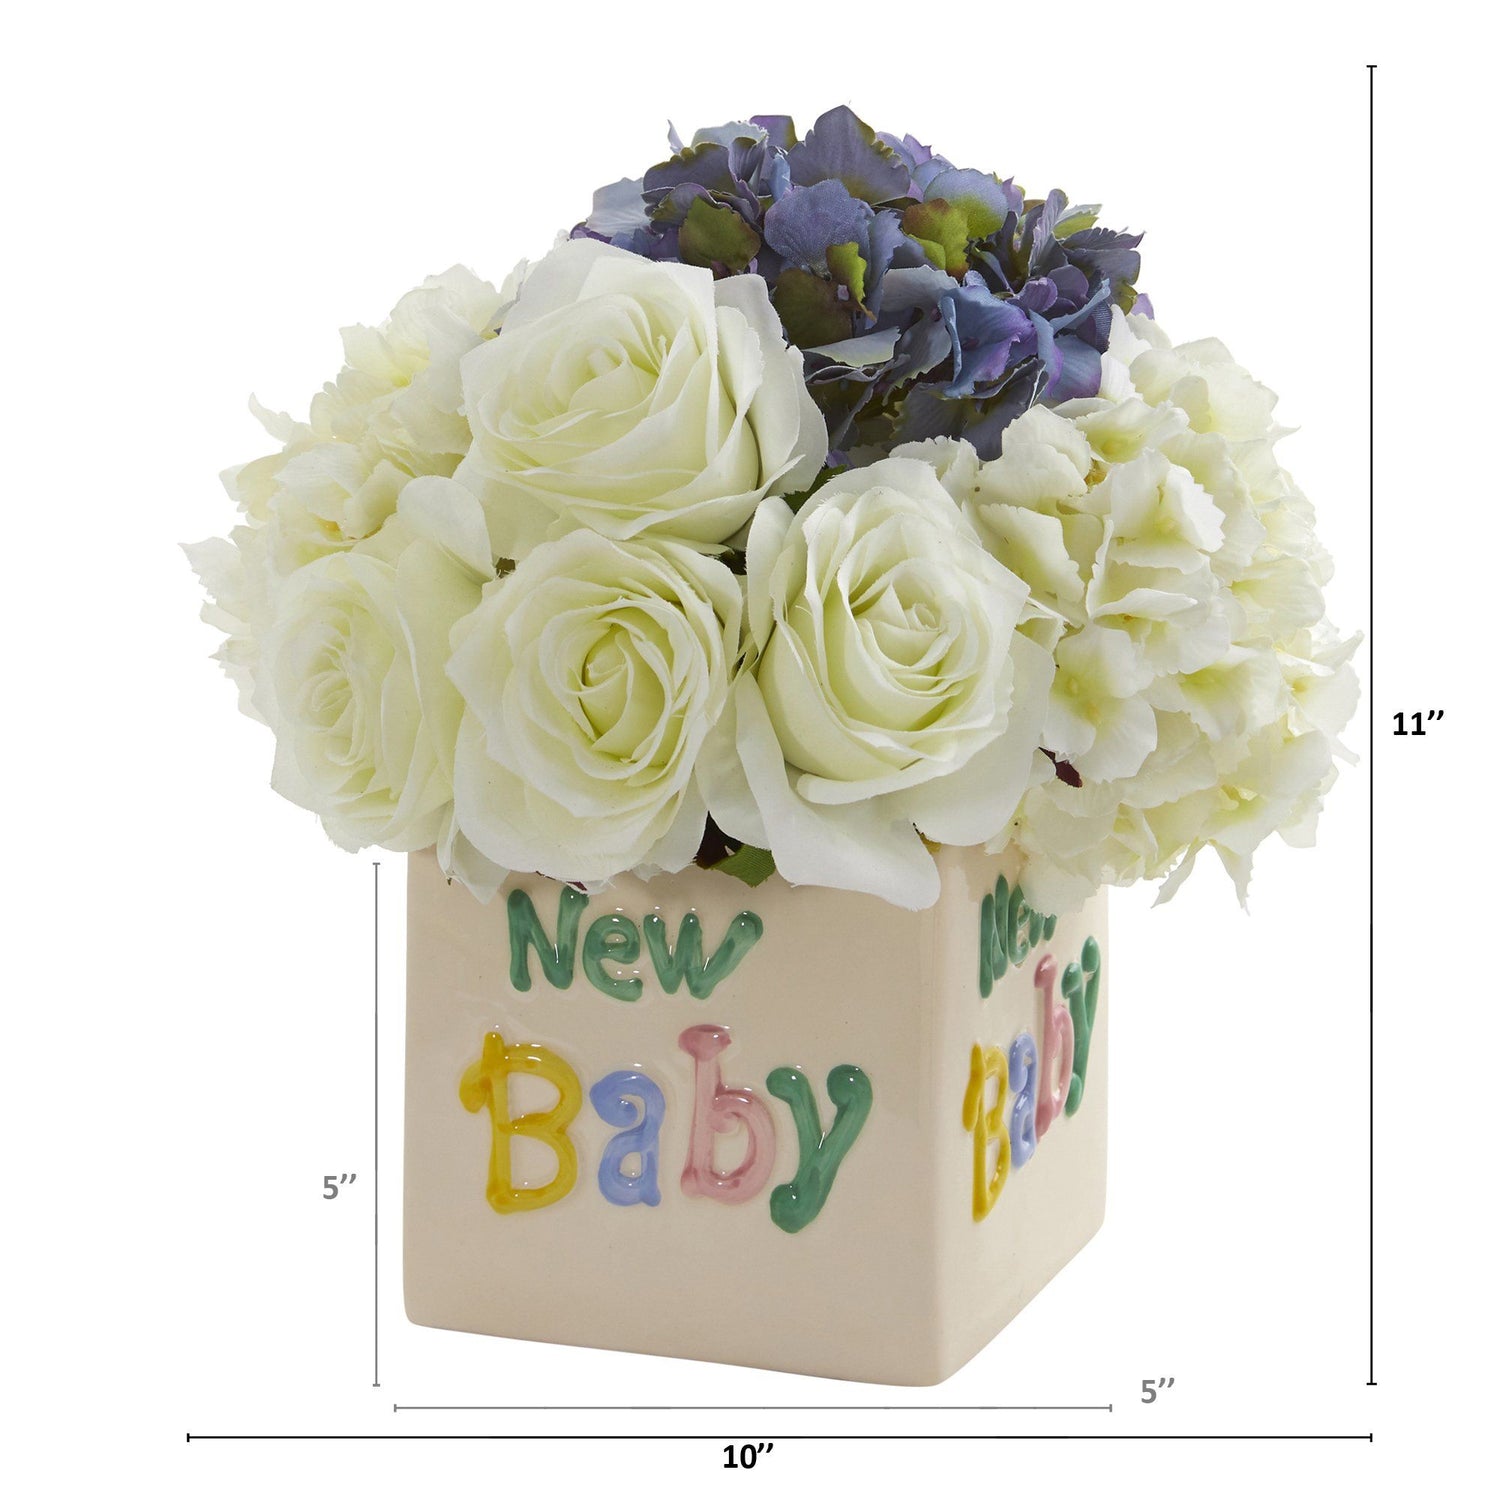 11” Rose and Hydrangea Artificial Arrangement in “New Baby” Vase